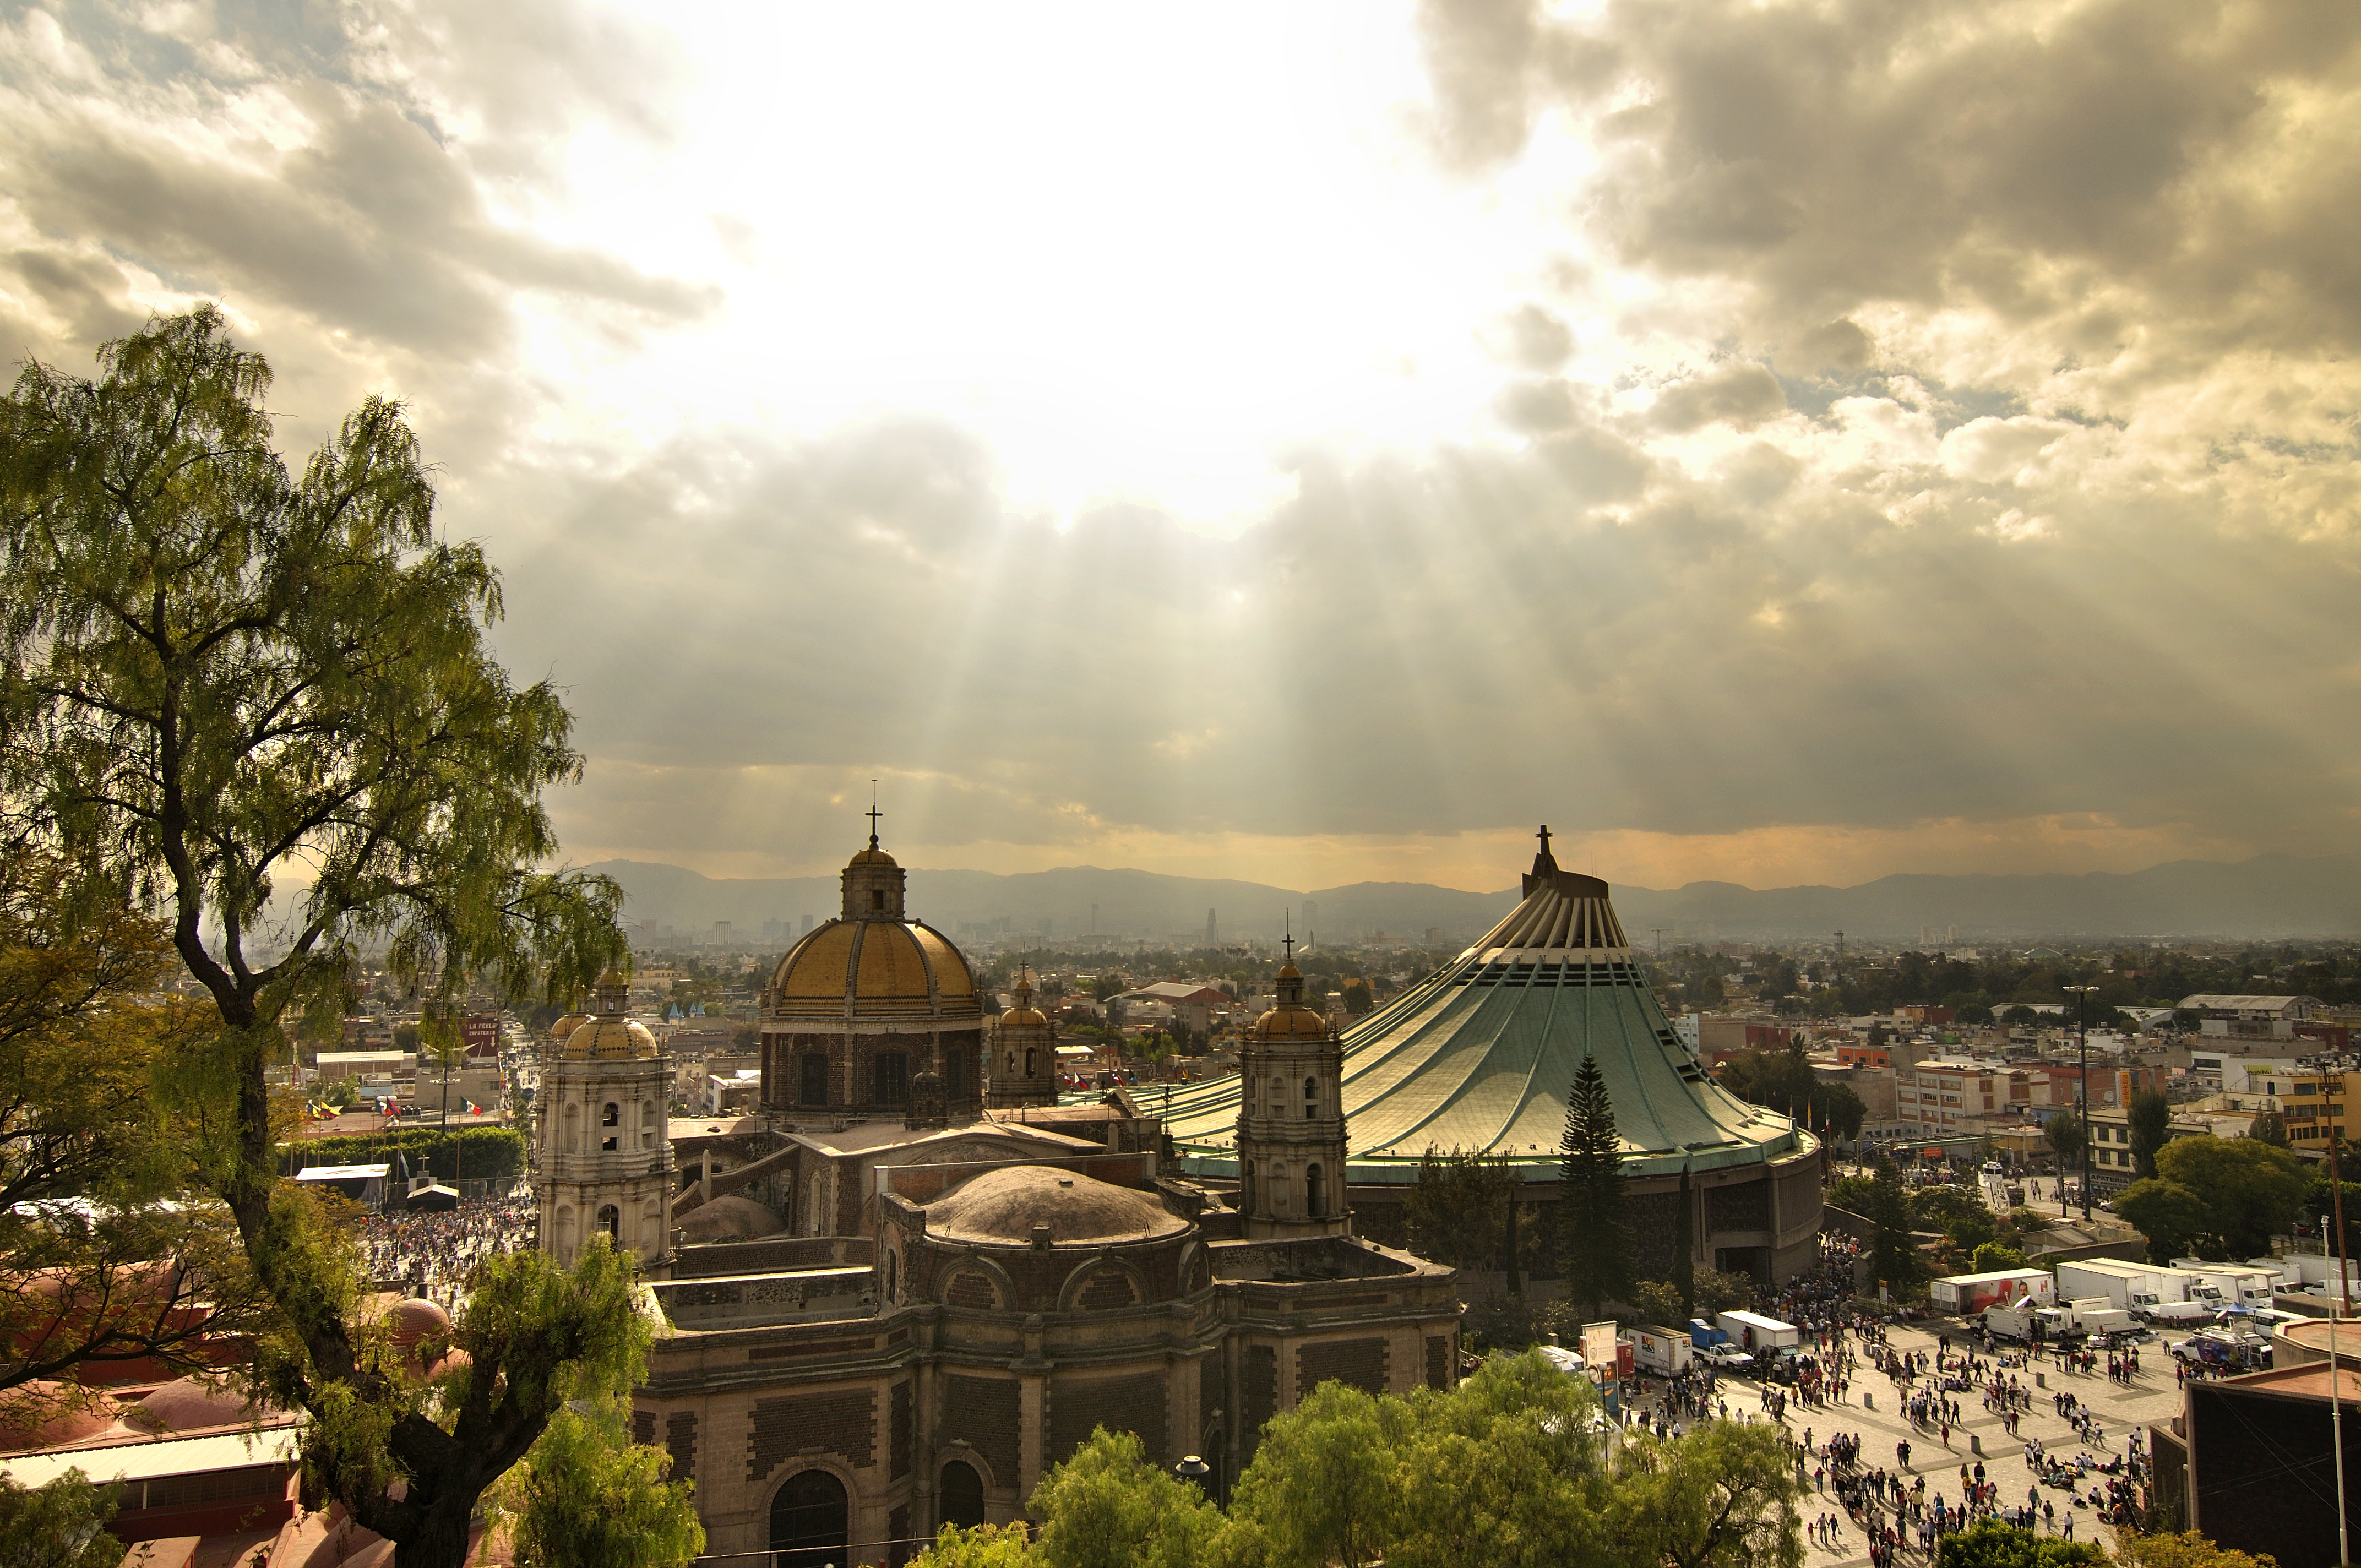 Basilica de Guadalupe, Mexico City